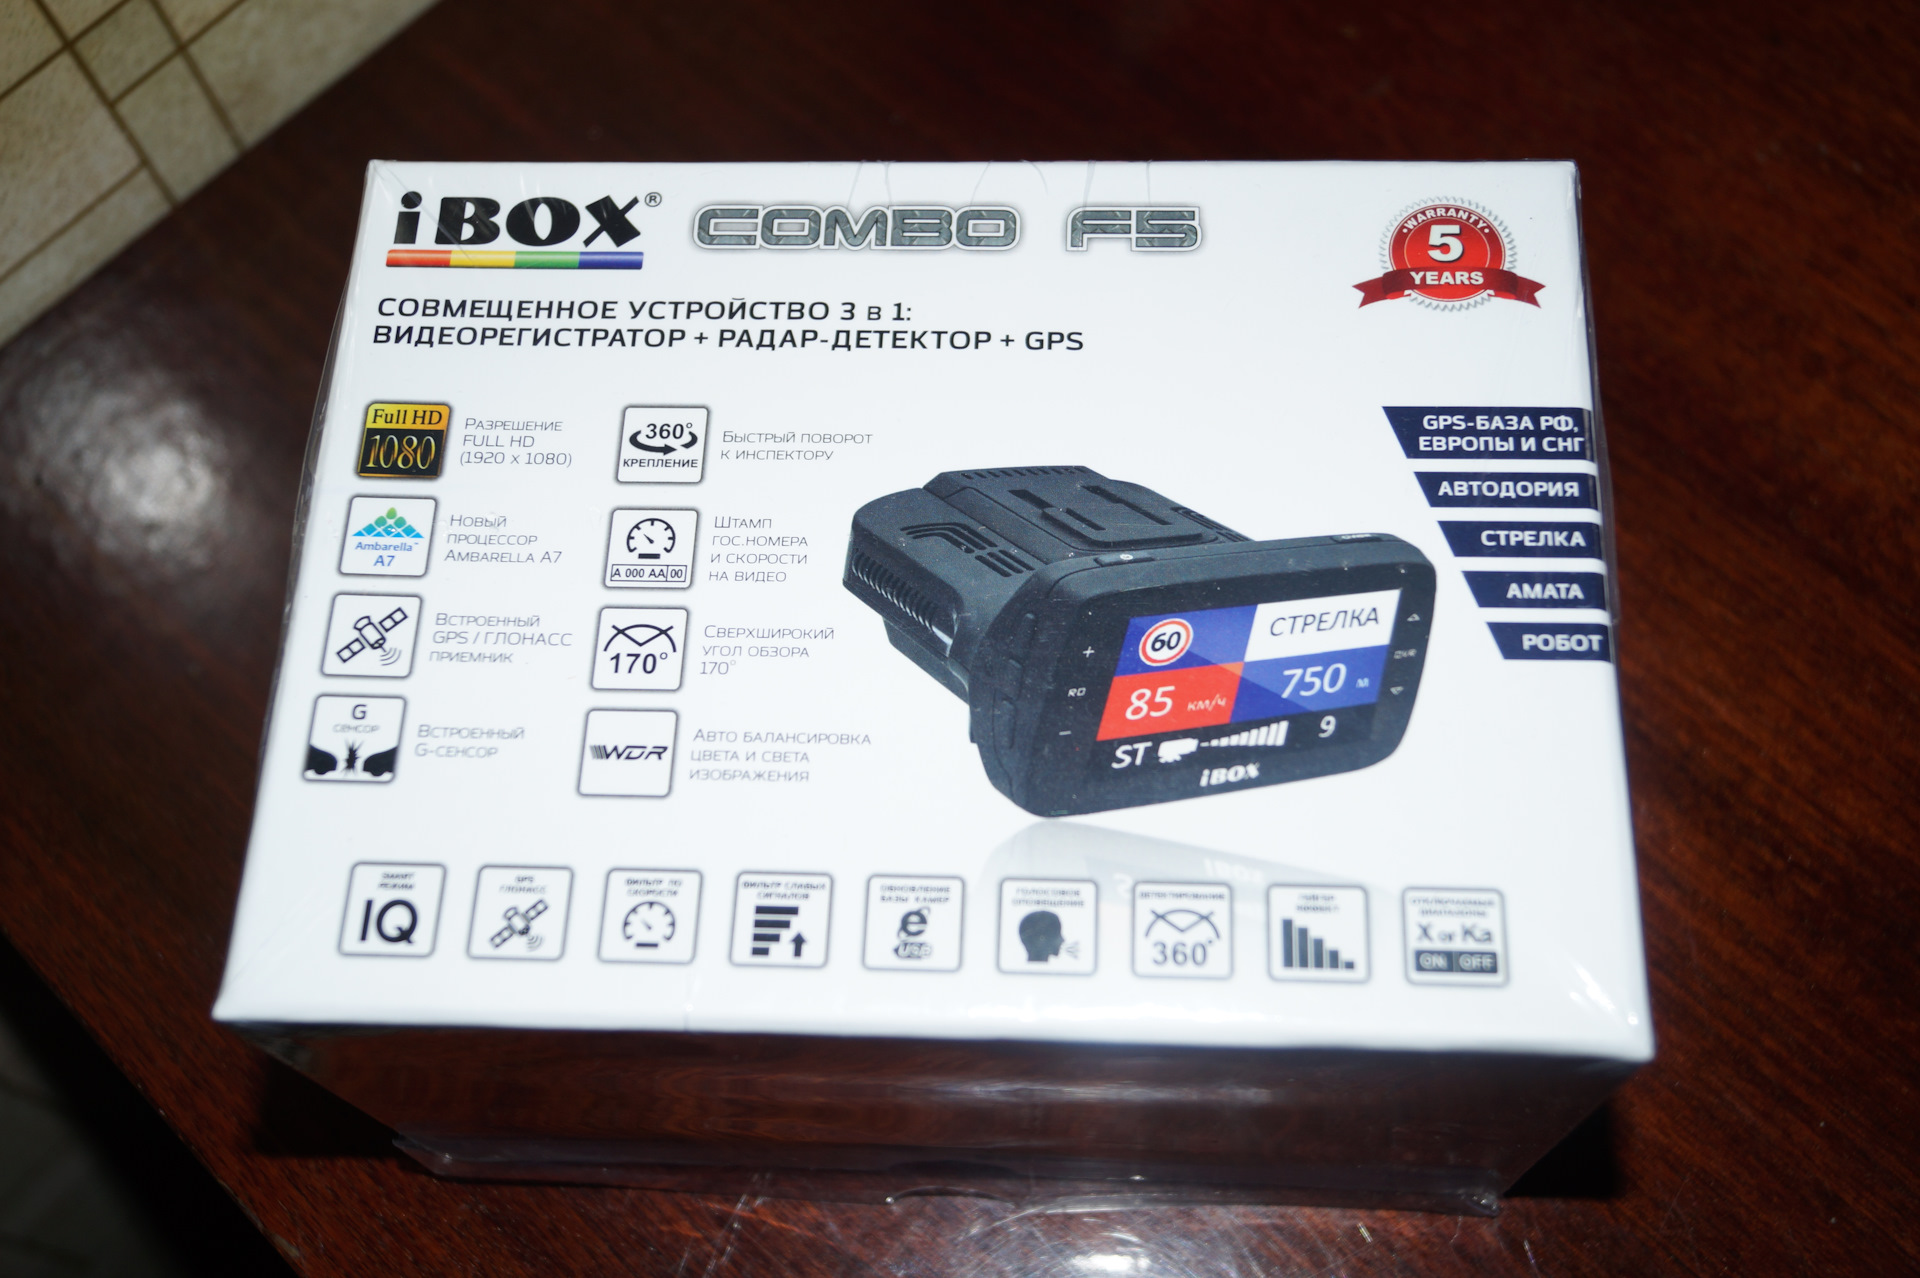 IBOX Combo gt. Радар детекторы ibox отзывы